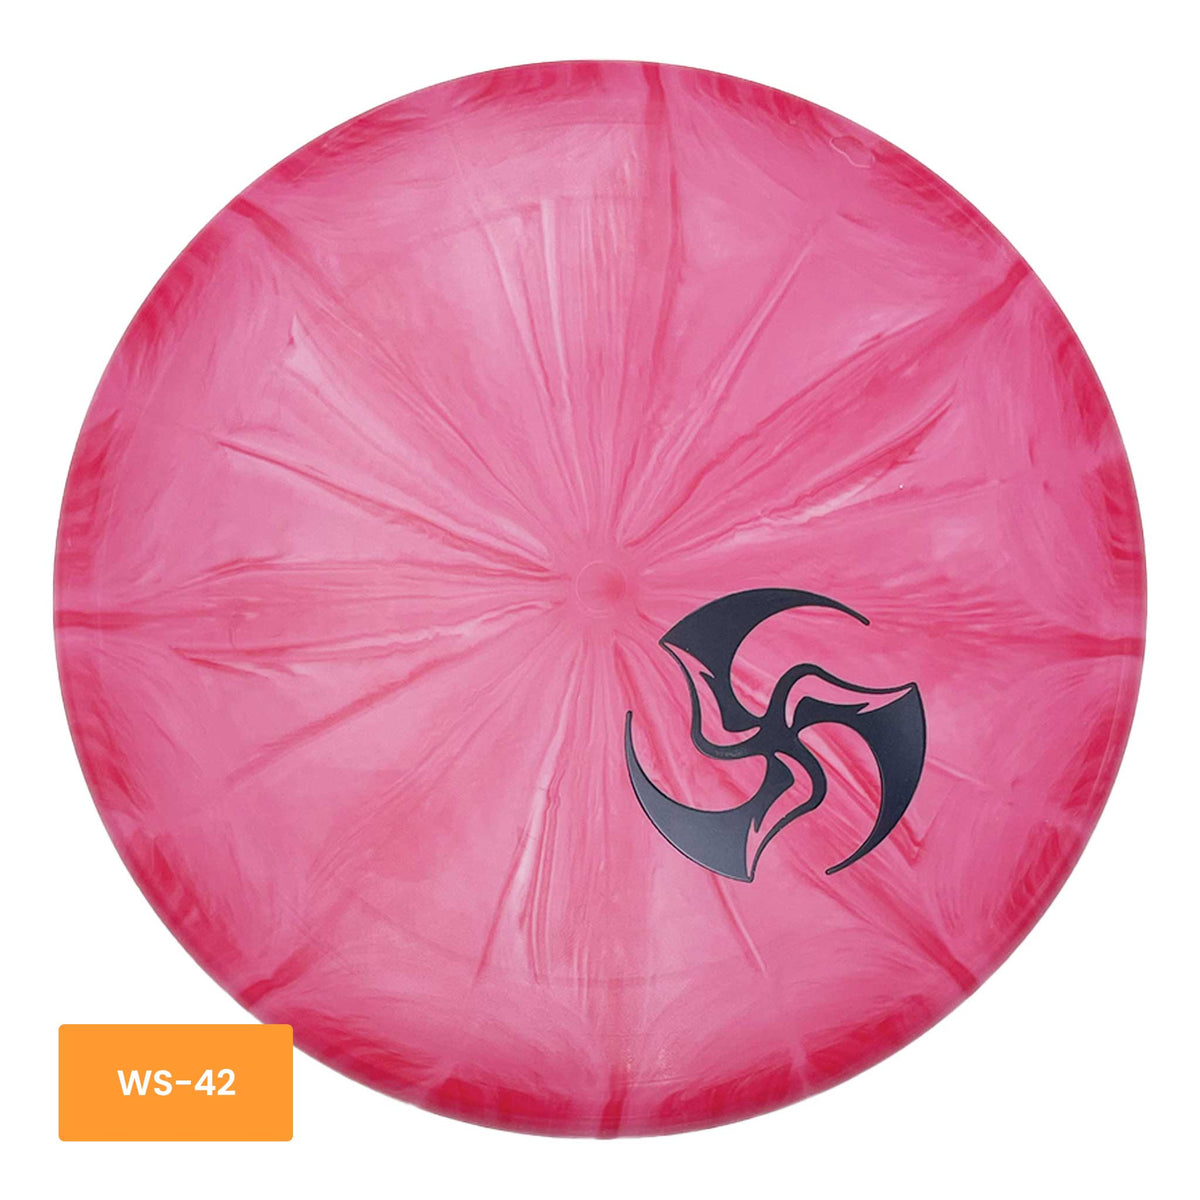 Westside Discs Origio Harp HukLab TriFly Dye midrange putter - Pink